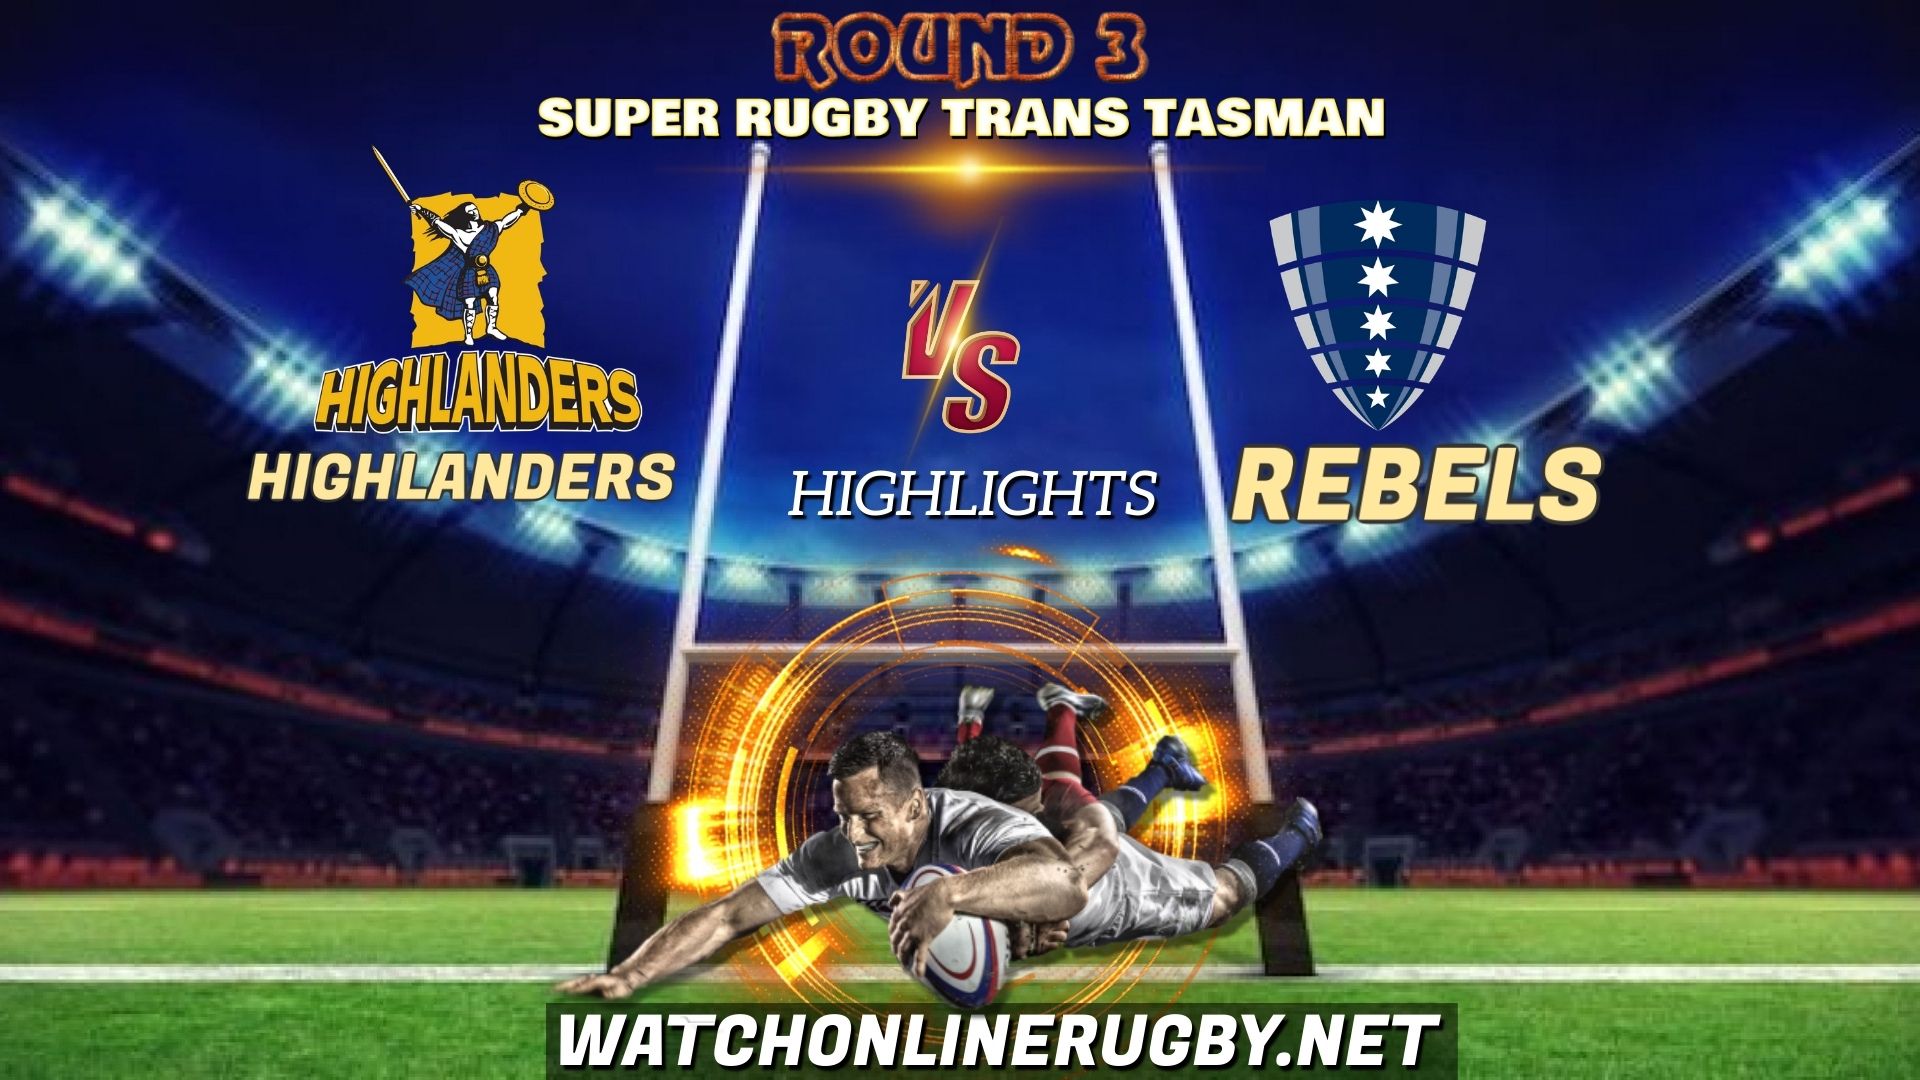 Highlanders Vs Rebels Super Rugby Trans Tasman 2021 RD 3